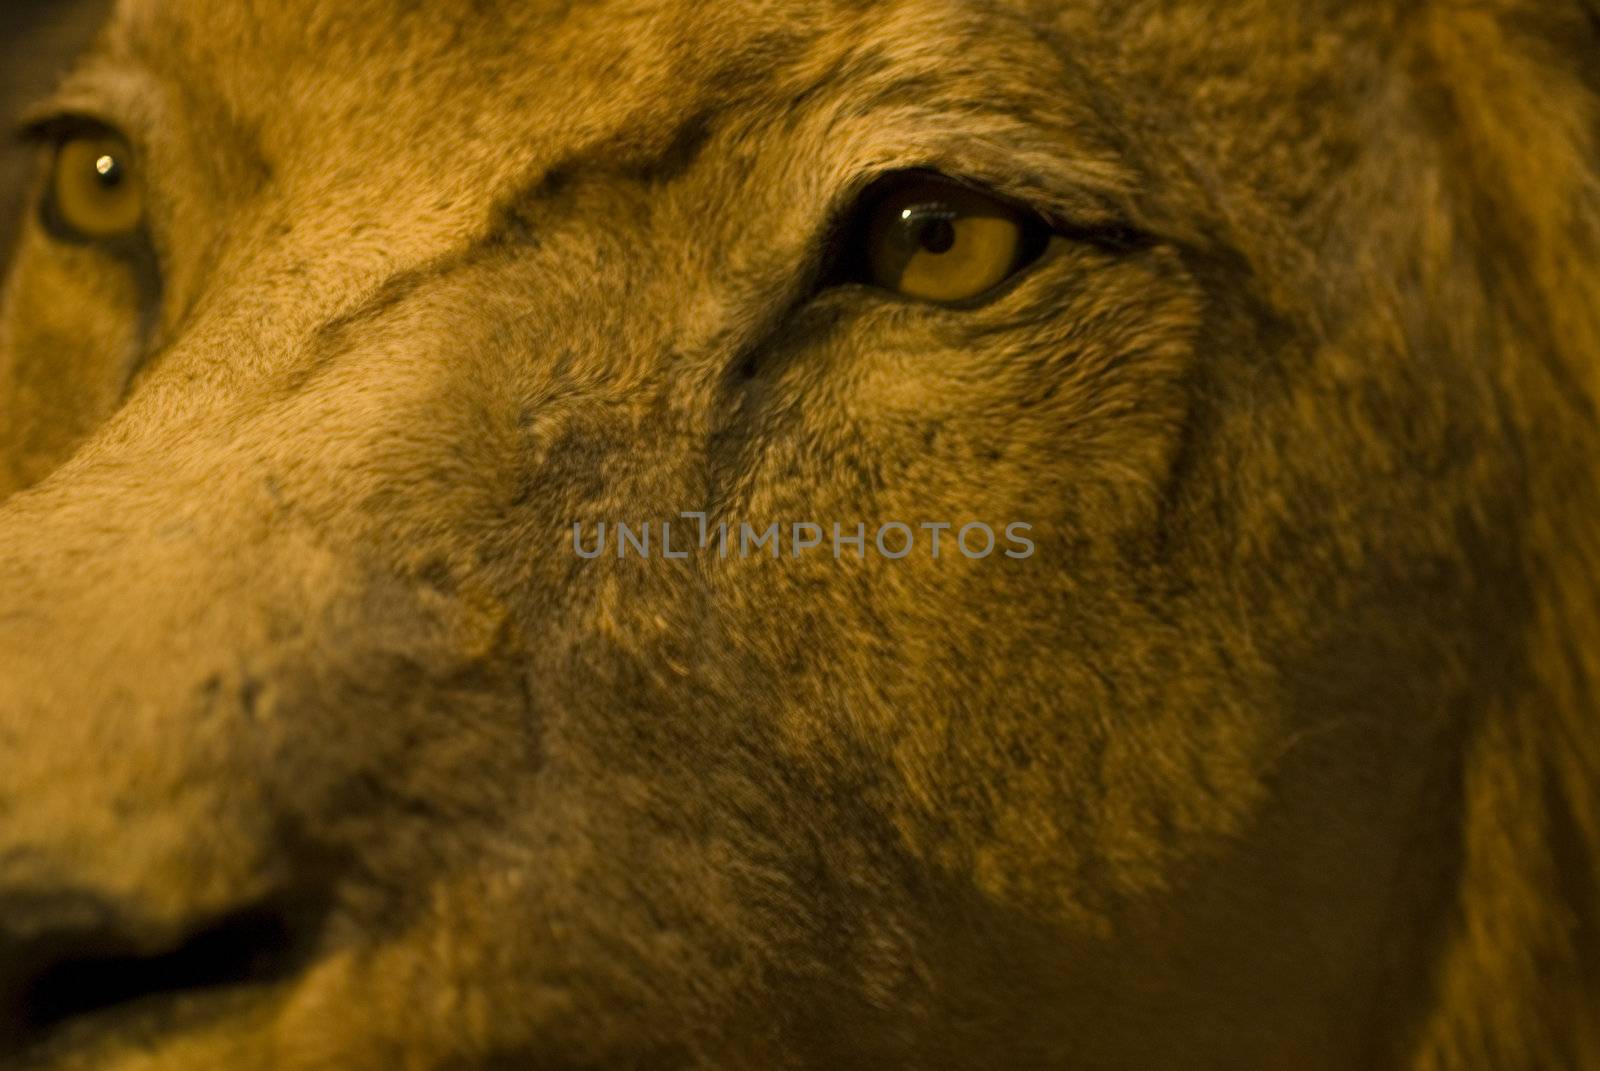 eyes of the lion by cynoclub